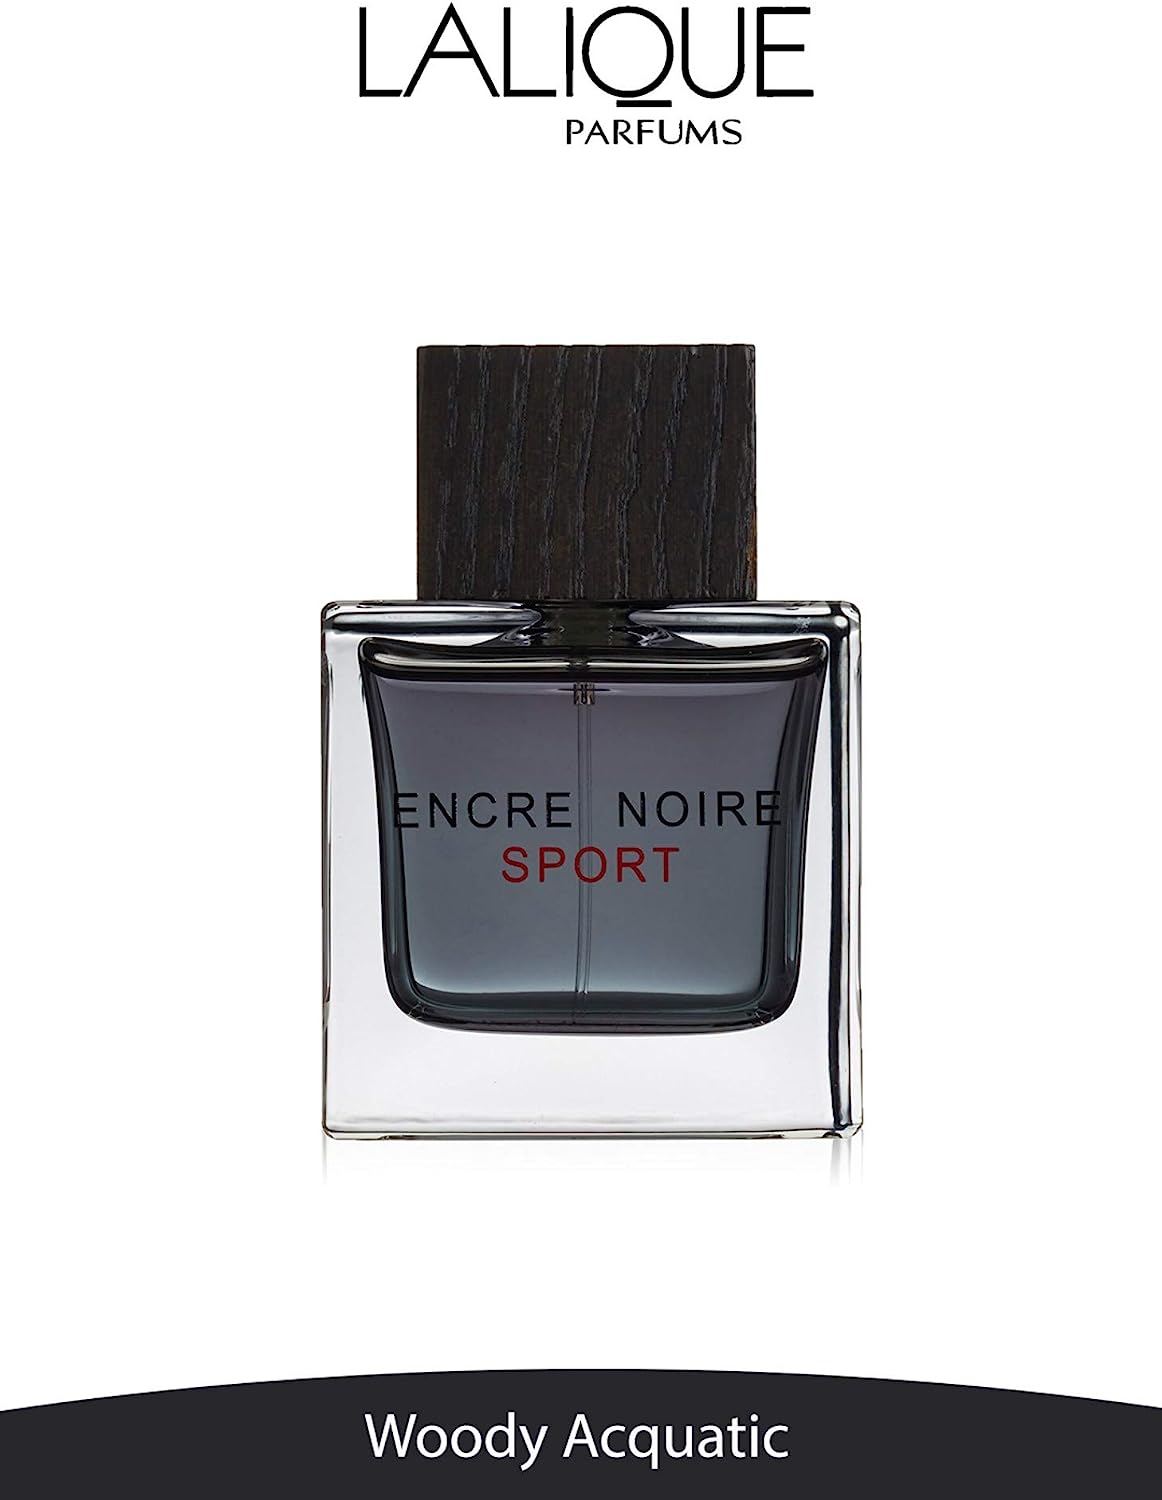 ادکلن مردانه لالیک مدل Lalique Encre Noire Sport 100 ml - ارسال 10 الی 15 روز کاری